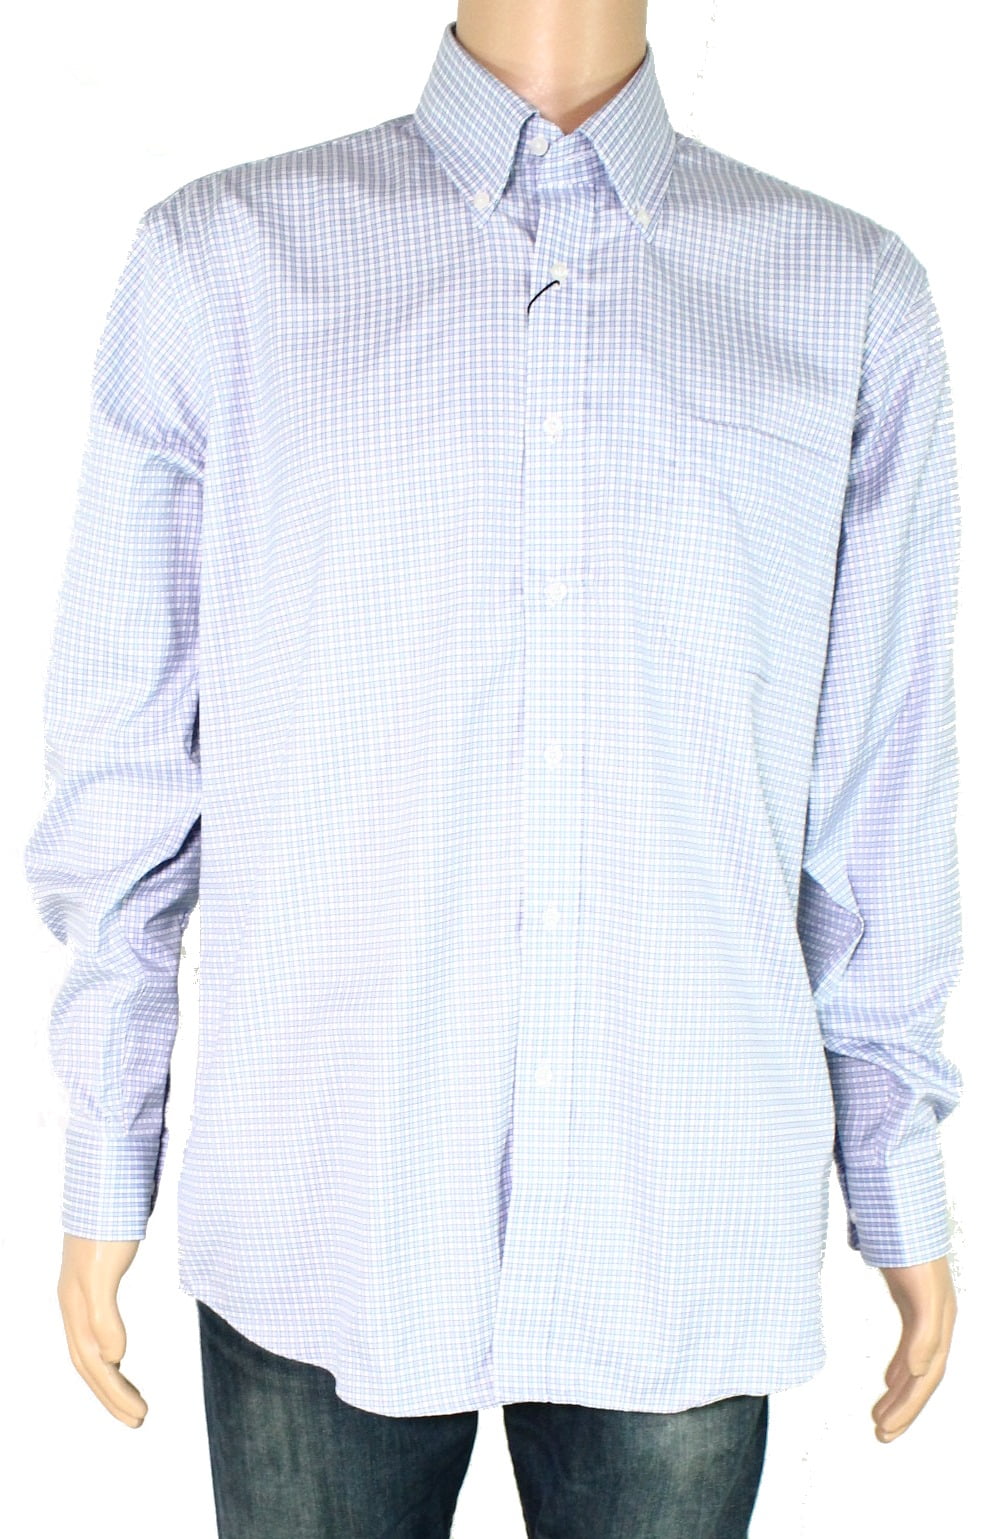 Forsyth of Canada - Mens Dress Shirt Light Checkered Tailored 16 ...